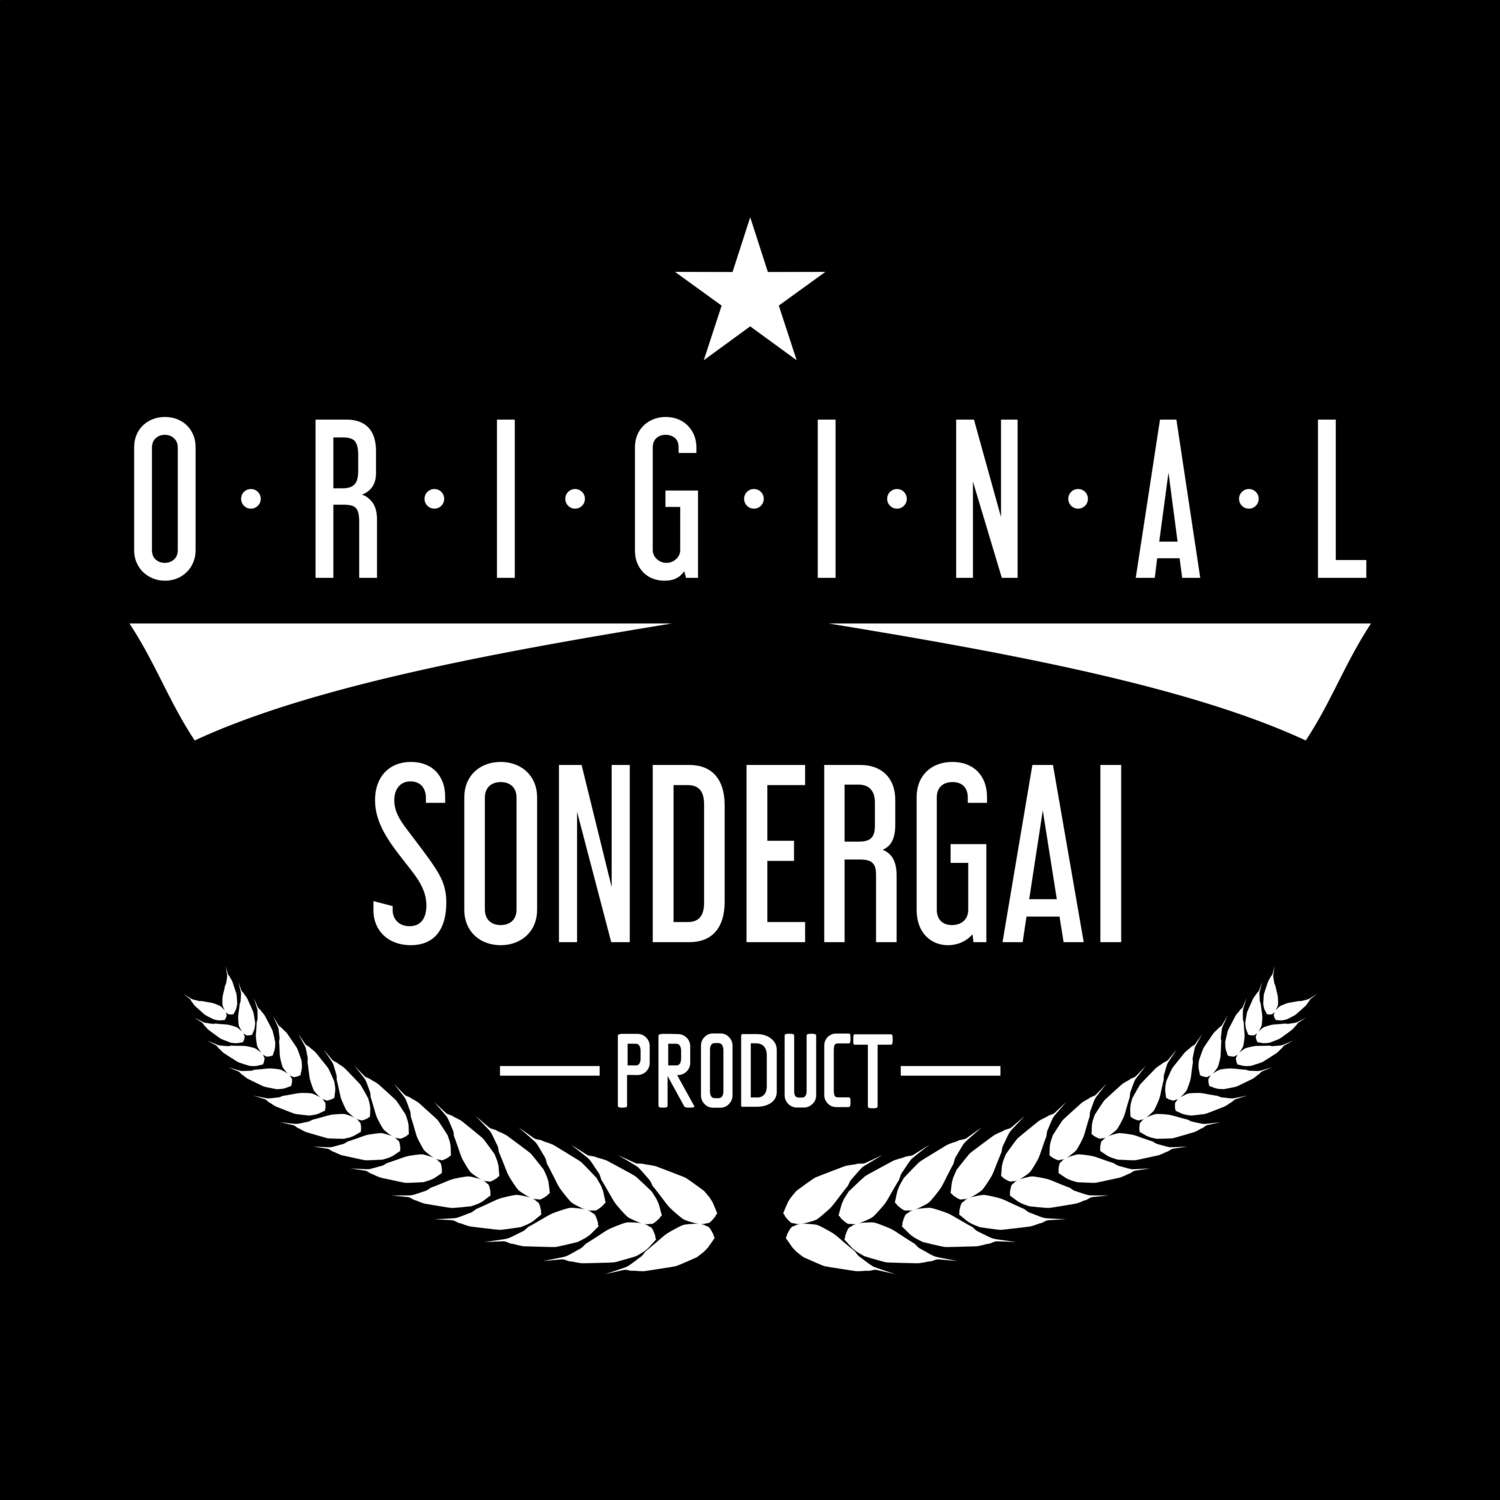 Sondergai T-Shirt »Original Product«